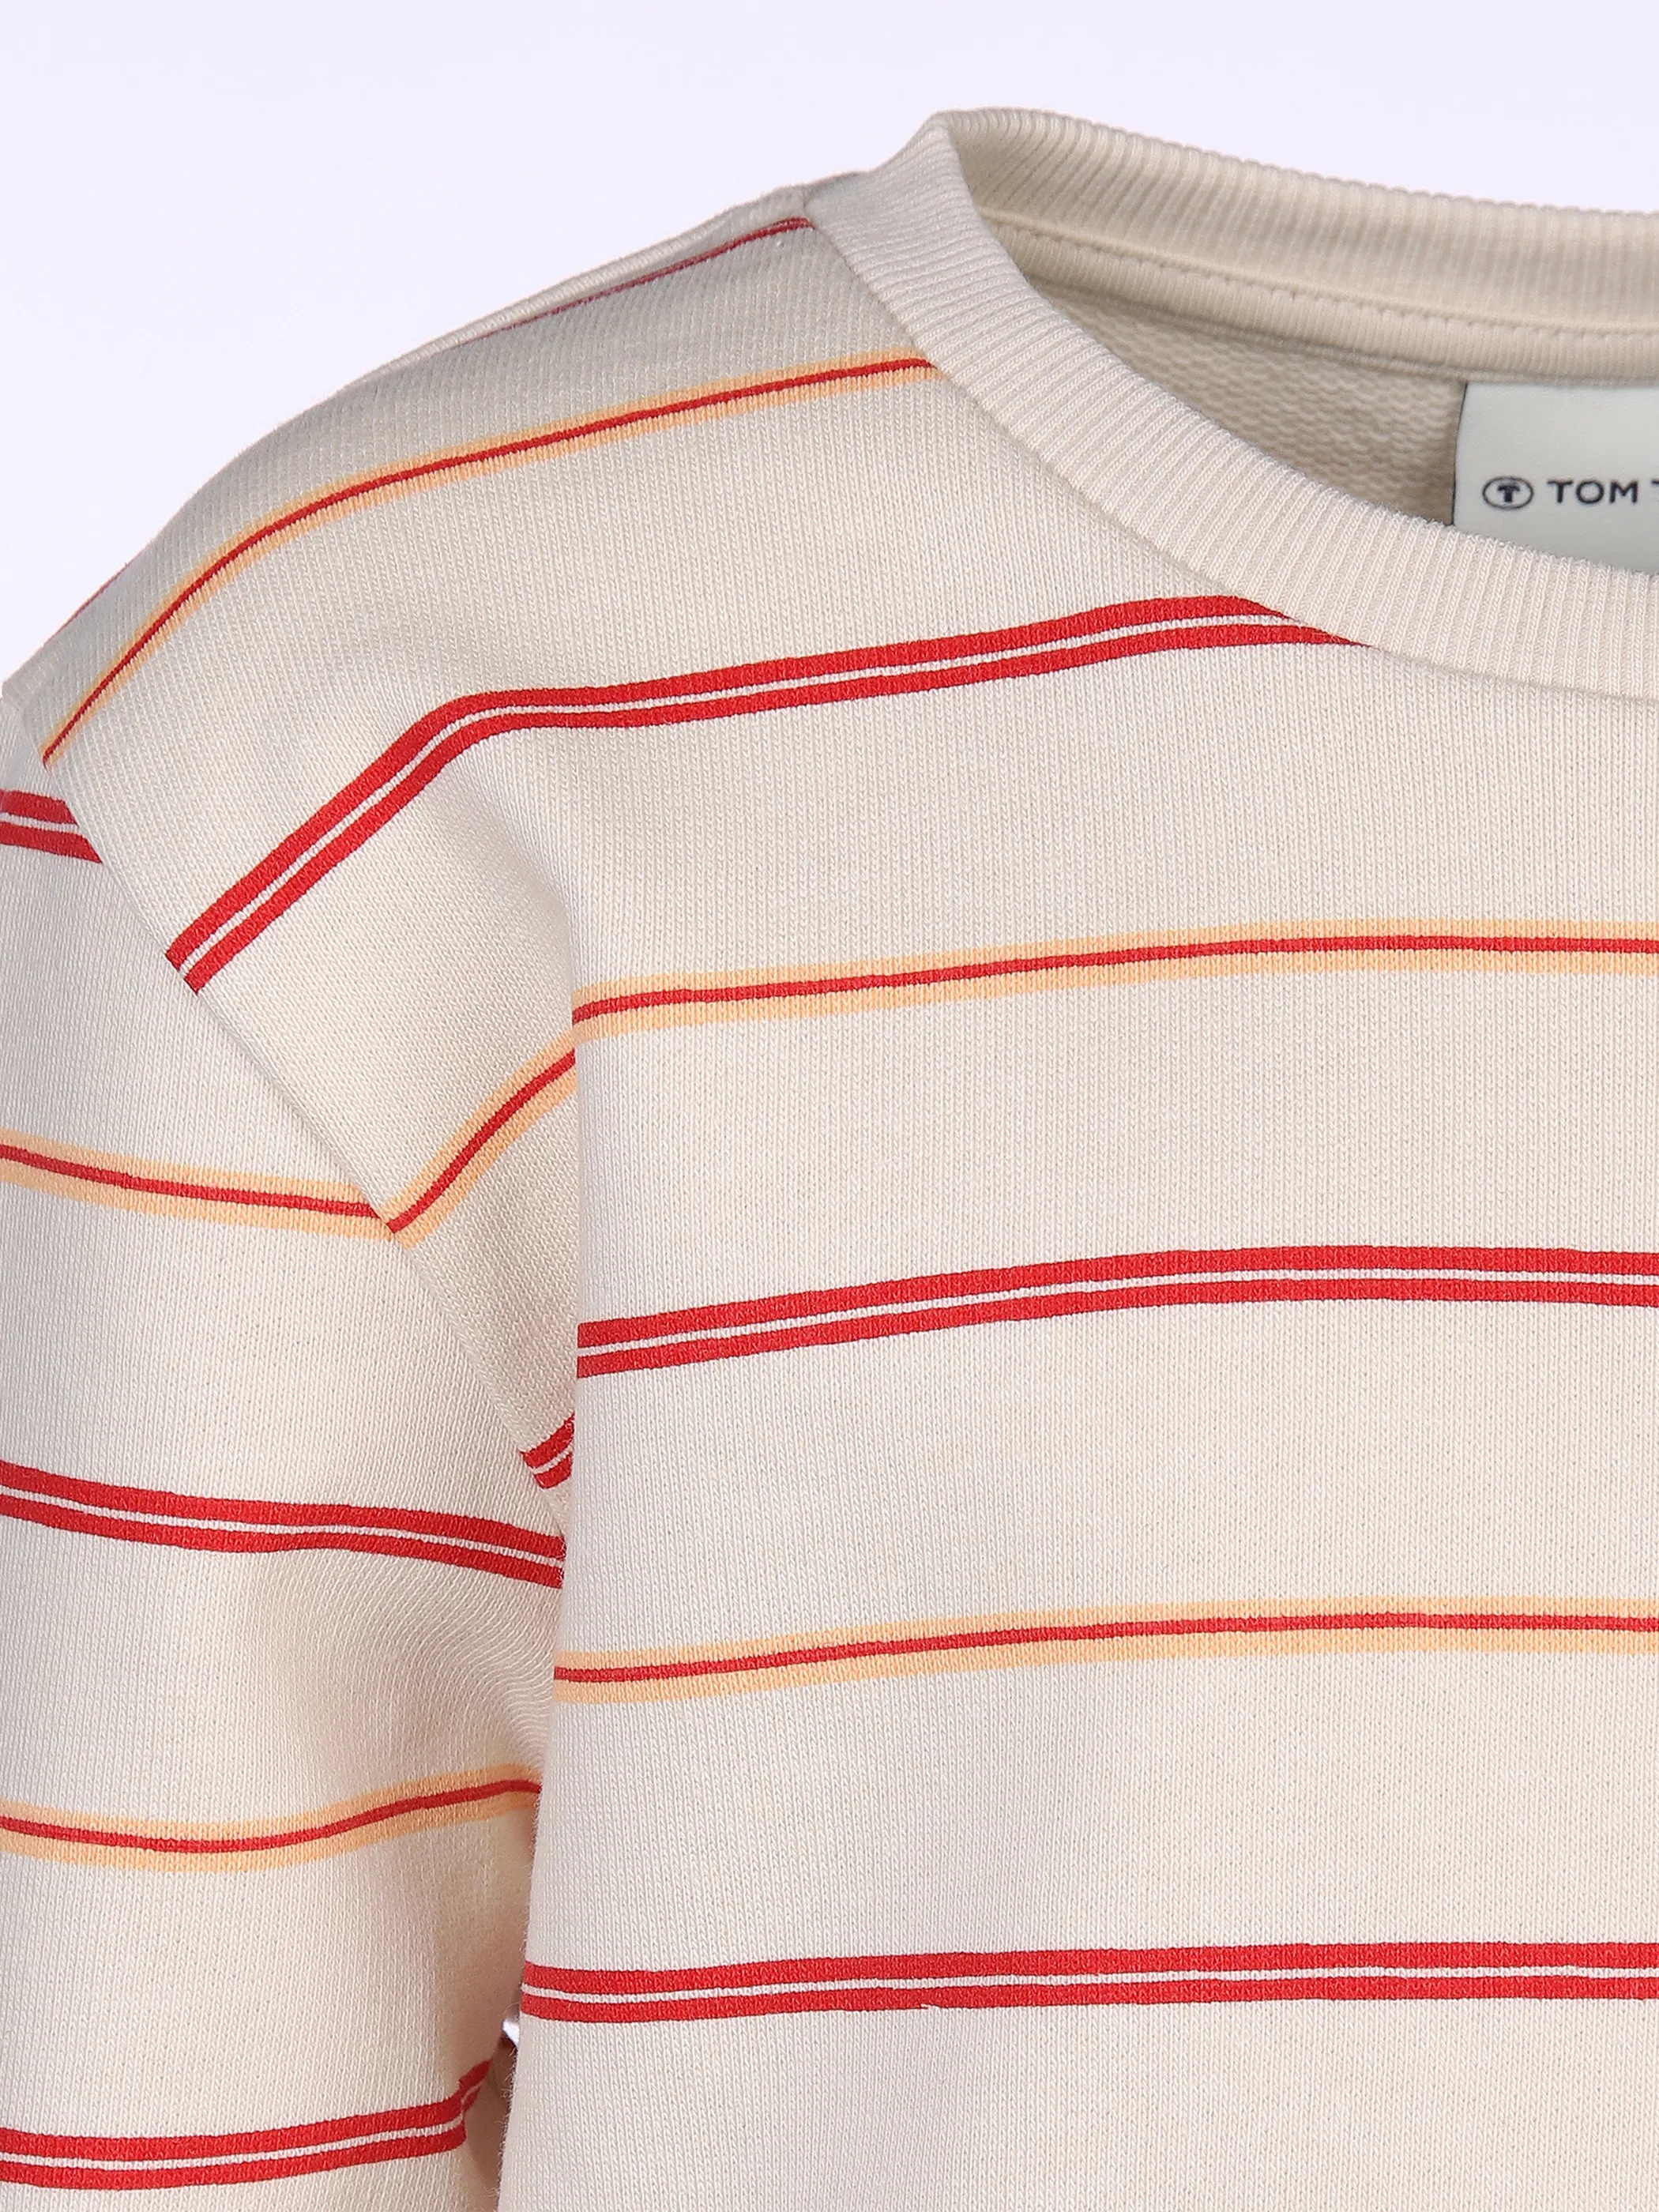 Tom Tailor 1030462 striped sweatshirt Rot 862622 29099 3